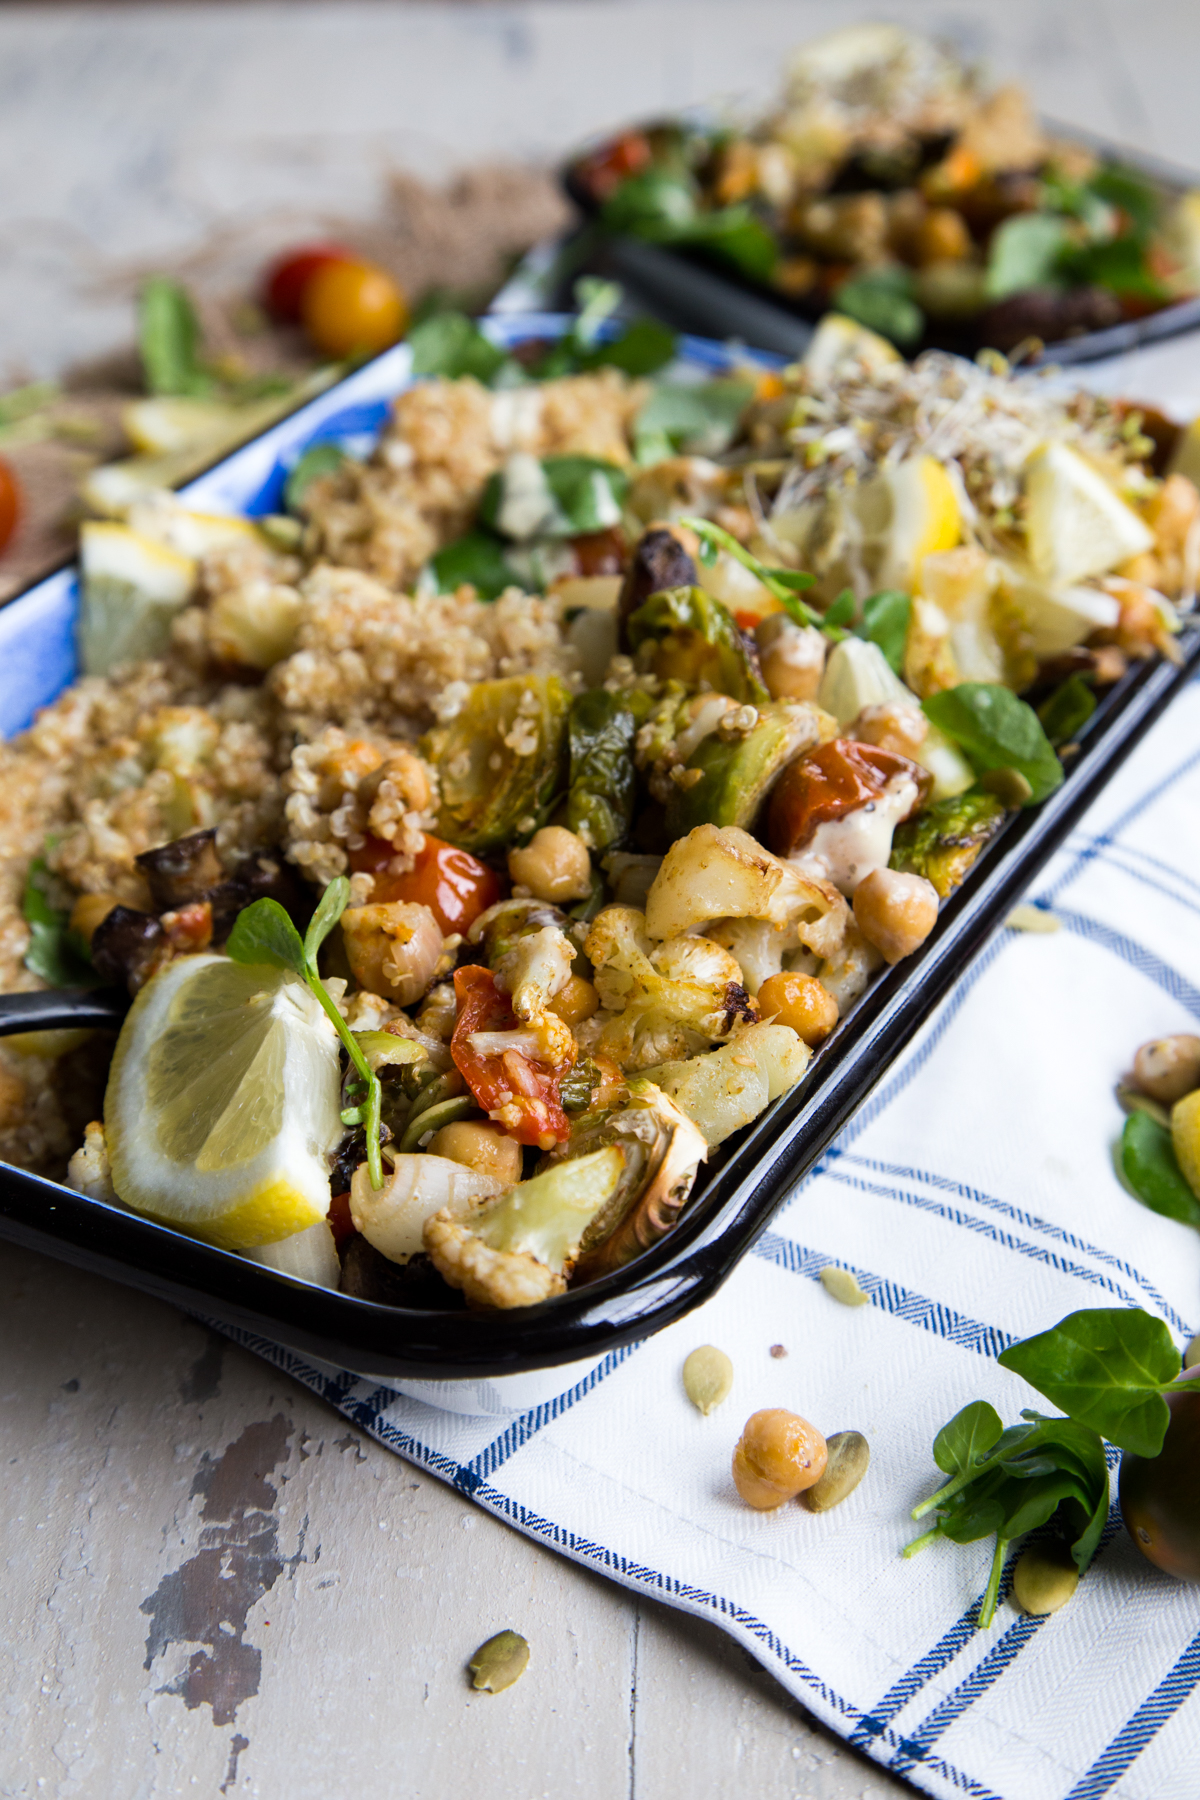 Dukkah Roasted Veggie Pilaf Bowls - Nourishing Superfood Bowls - Paleo and Vegan options! All Gluten Free!